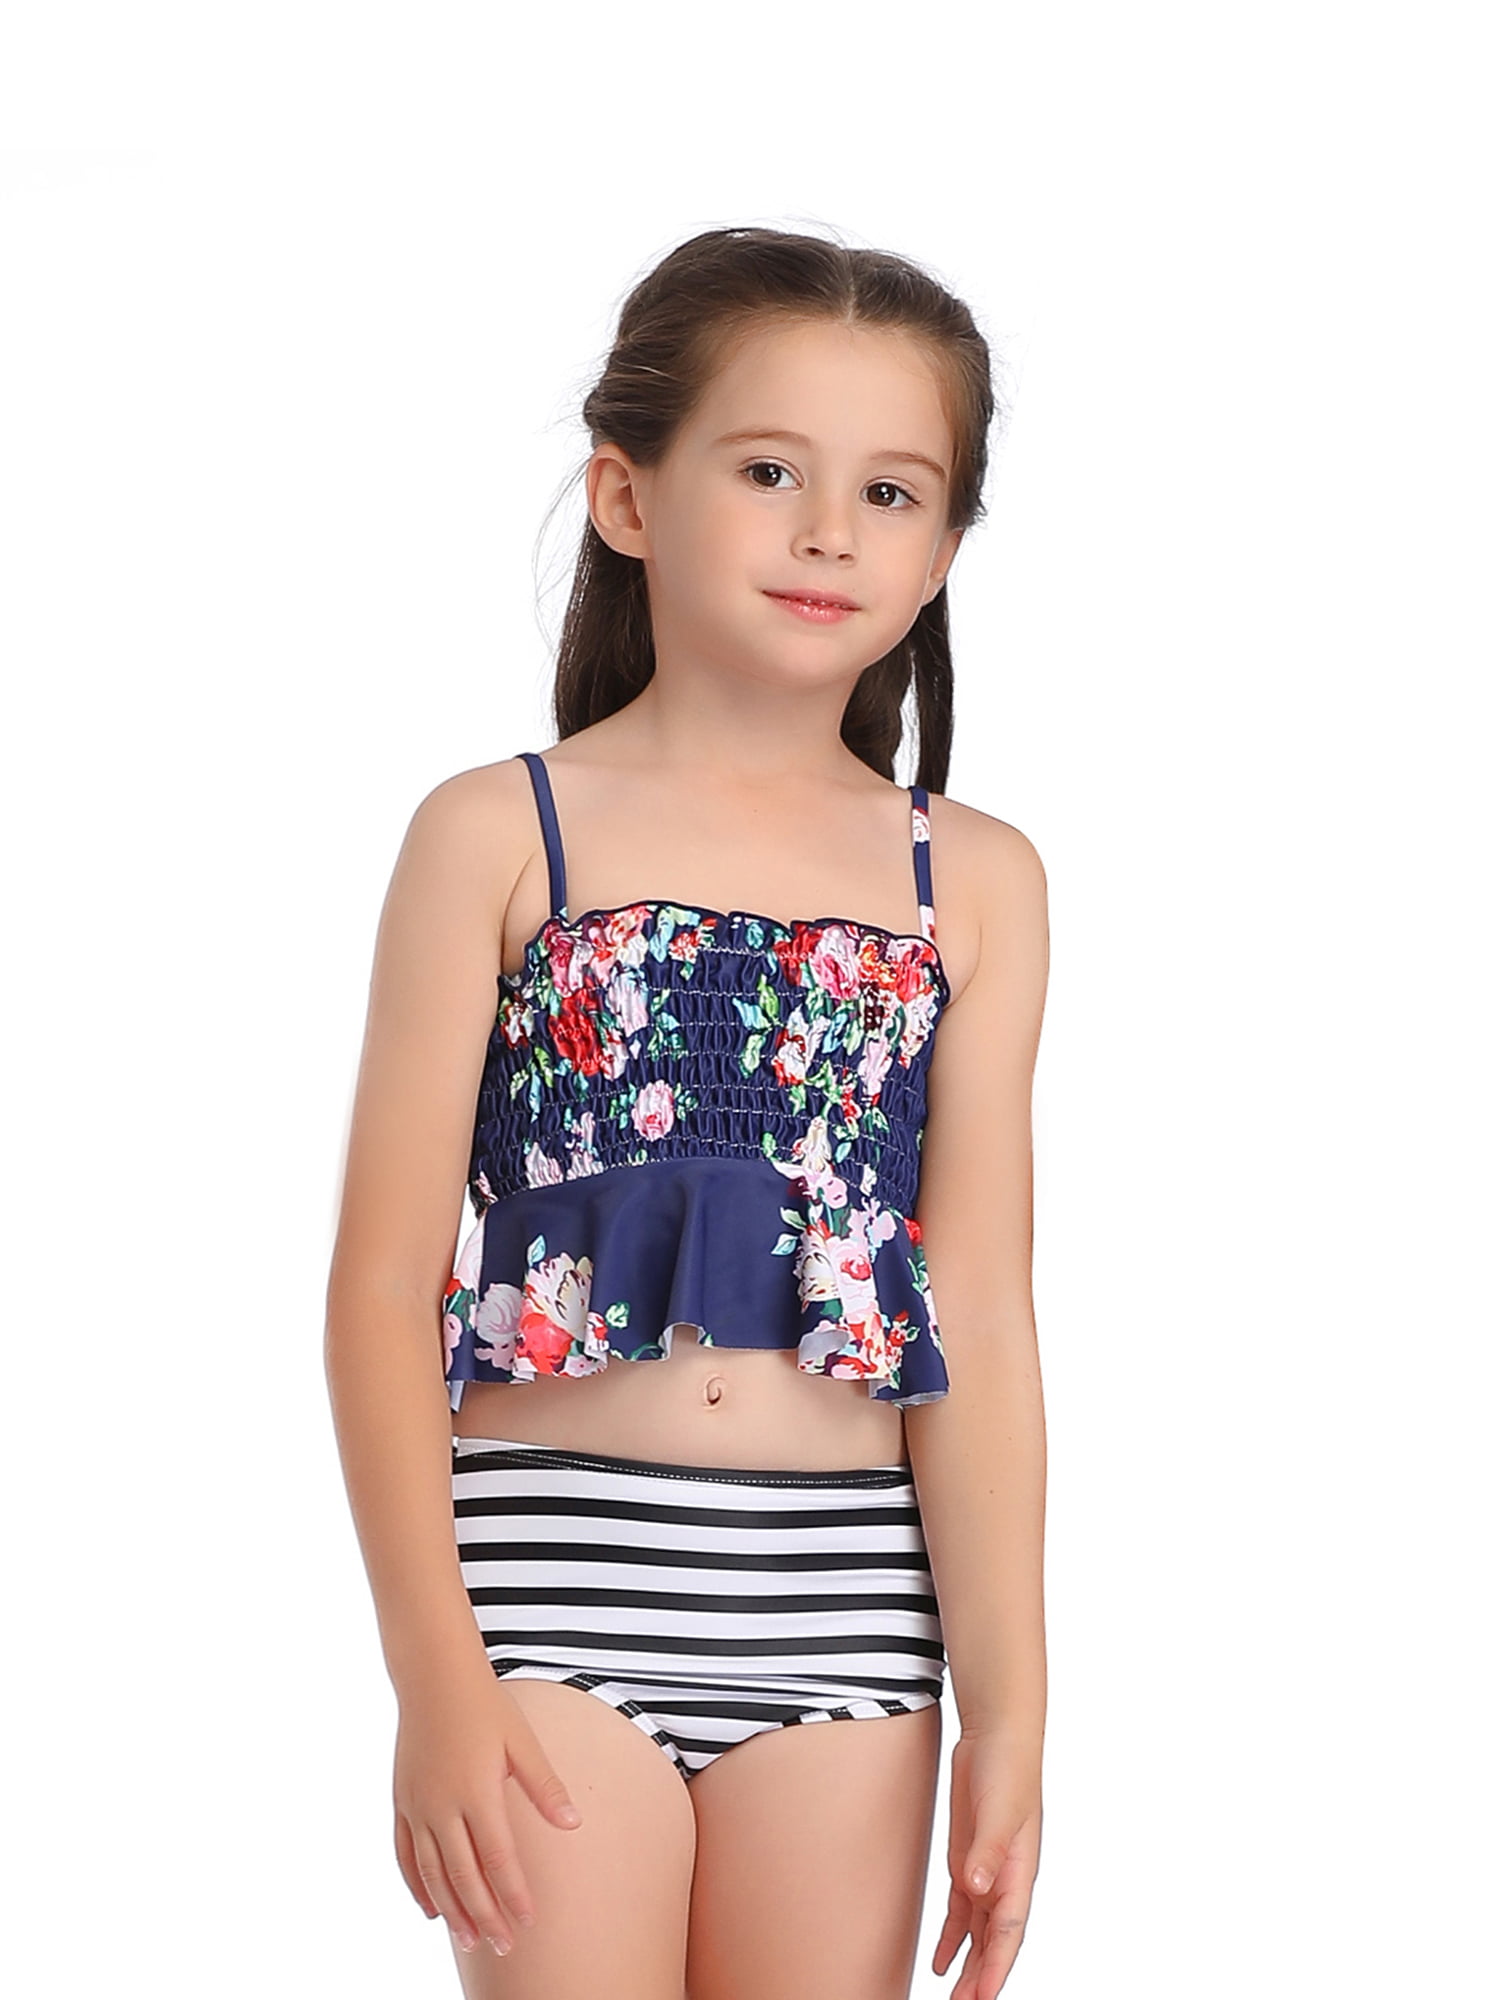 Baby Girls Ruffles Bikini,Hollow Ruffle Two Piece Bikini Set Summer Vacation Swimsuit Clothes Mix